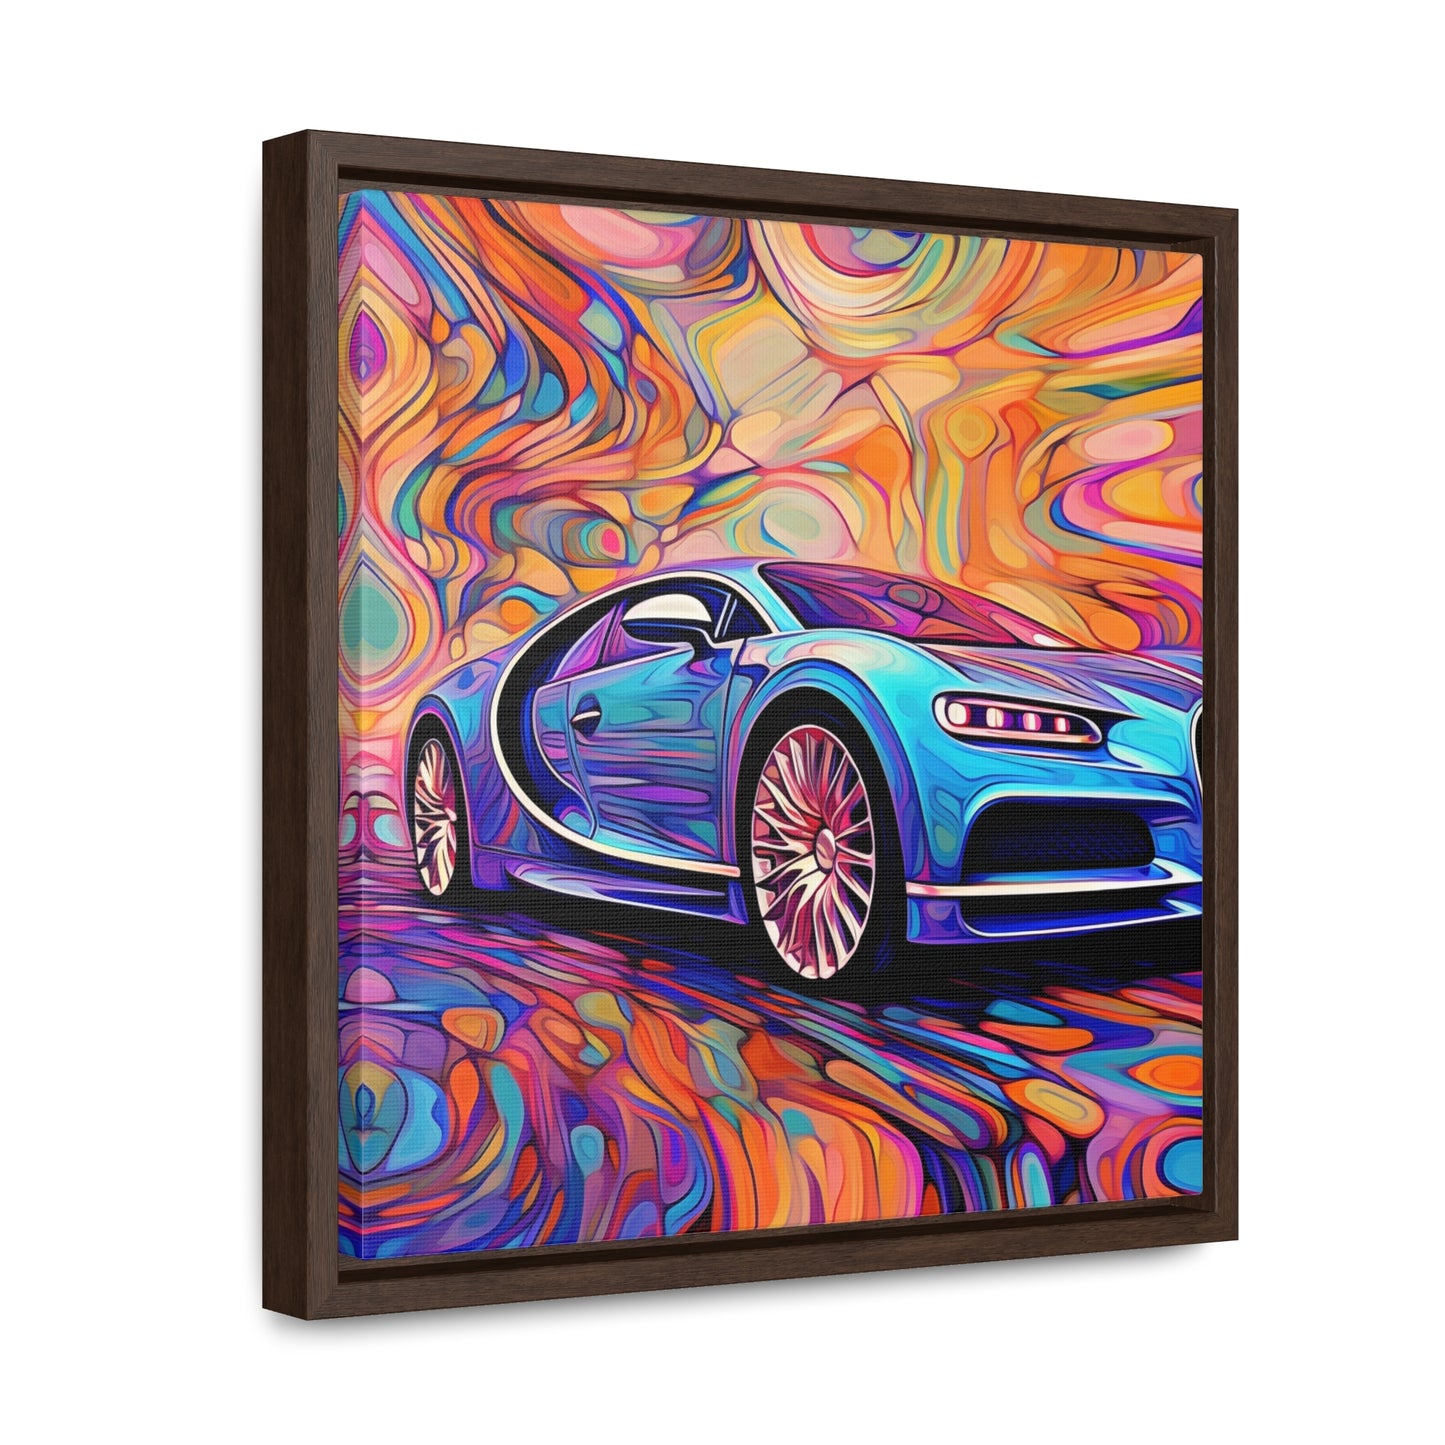 Gallery Canvas Wraps, Square Frame Bugatti Abstract Concept 3